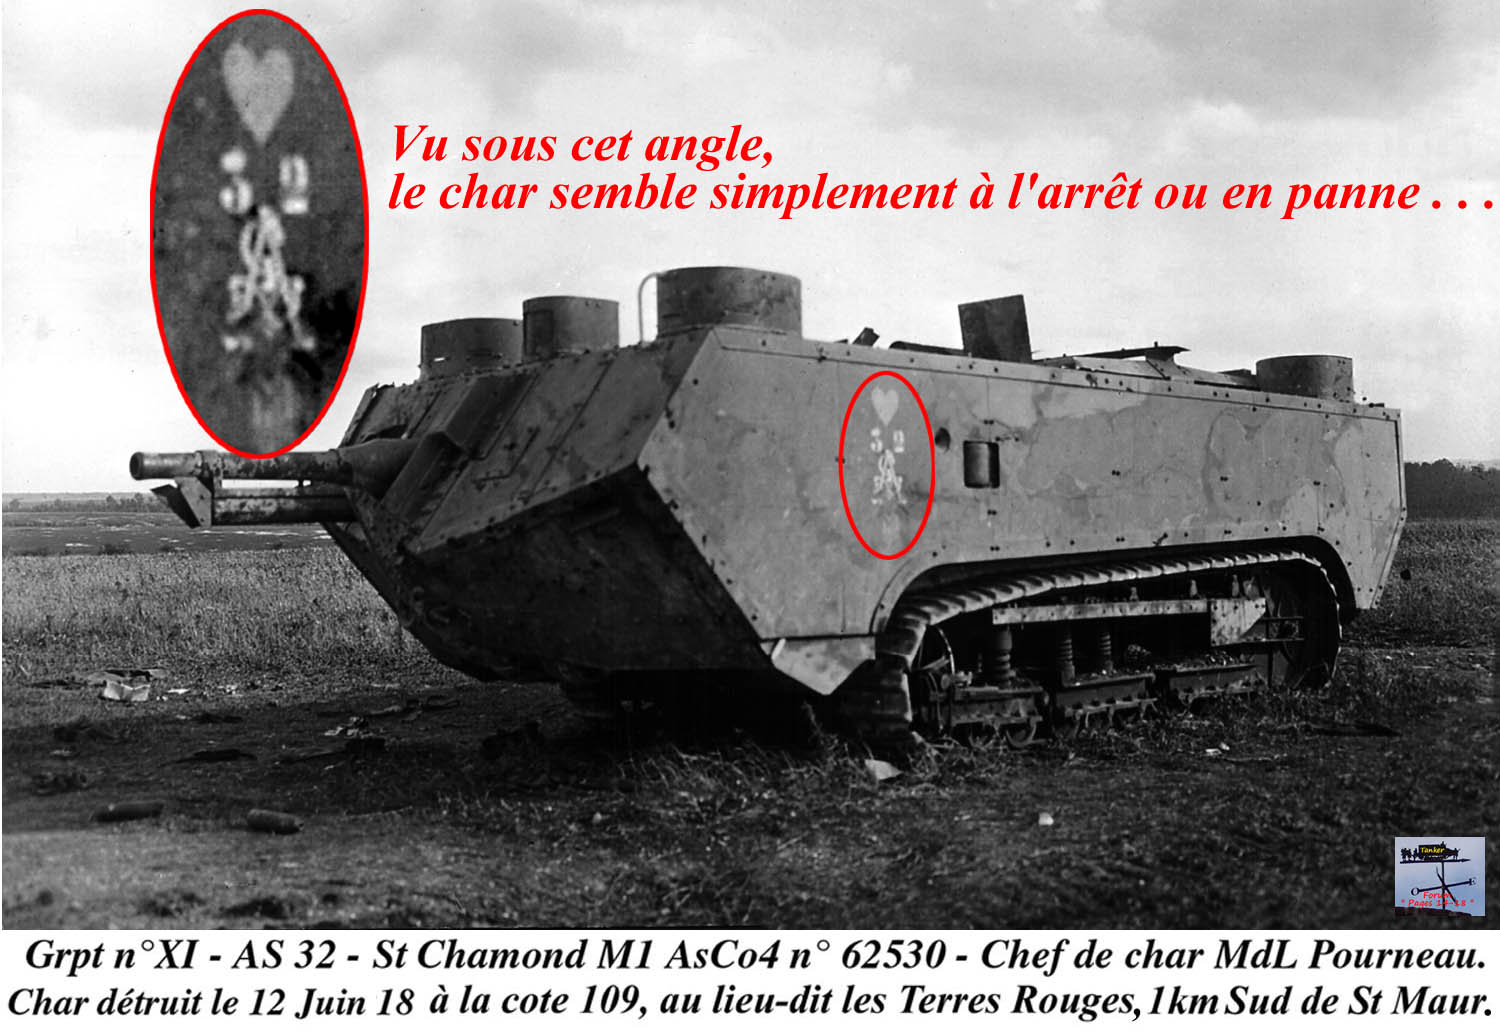 AS 32 - St Chamond M1 AsCo4 n° 62530 (01a1).jpg